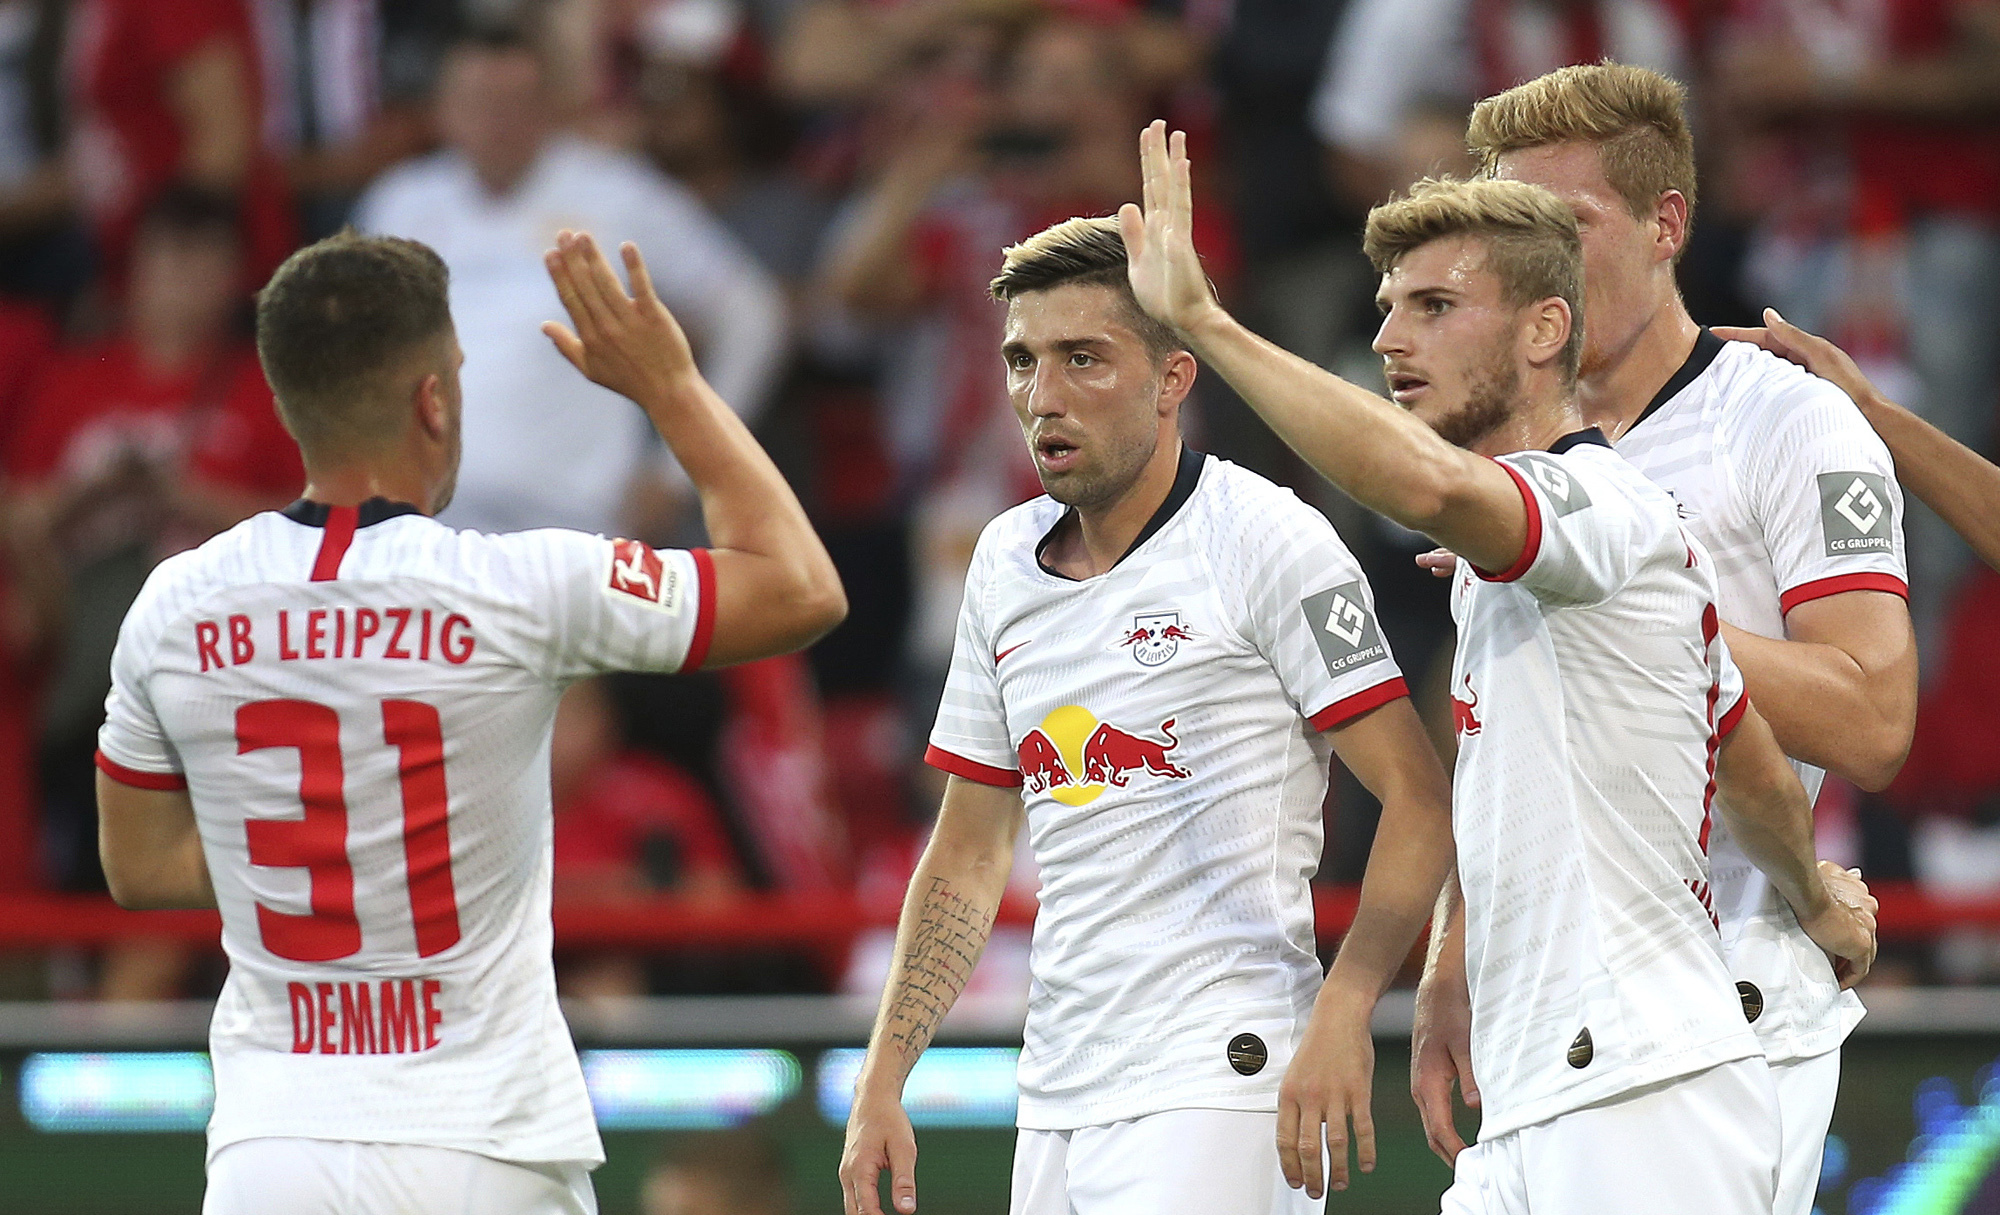 Silent start in Bundesliga for Union Berlin ends in 4-0 loss